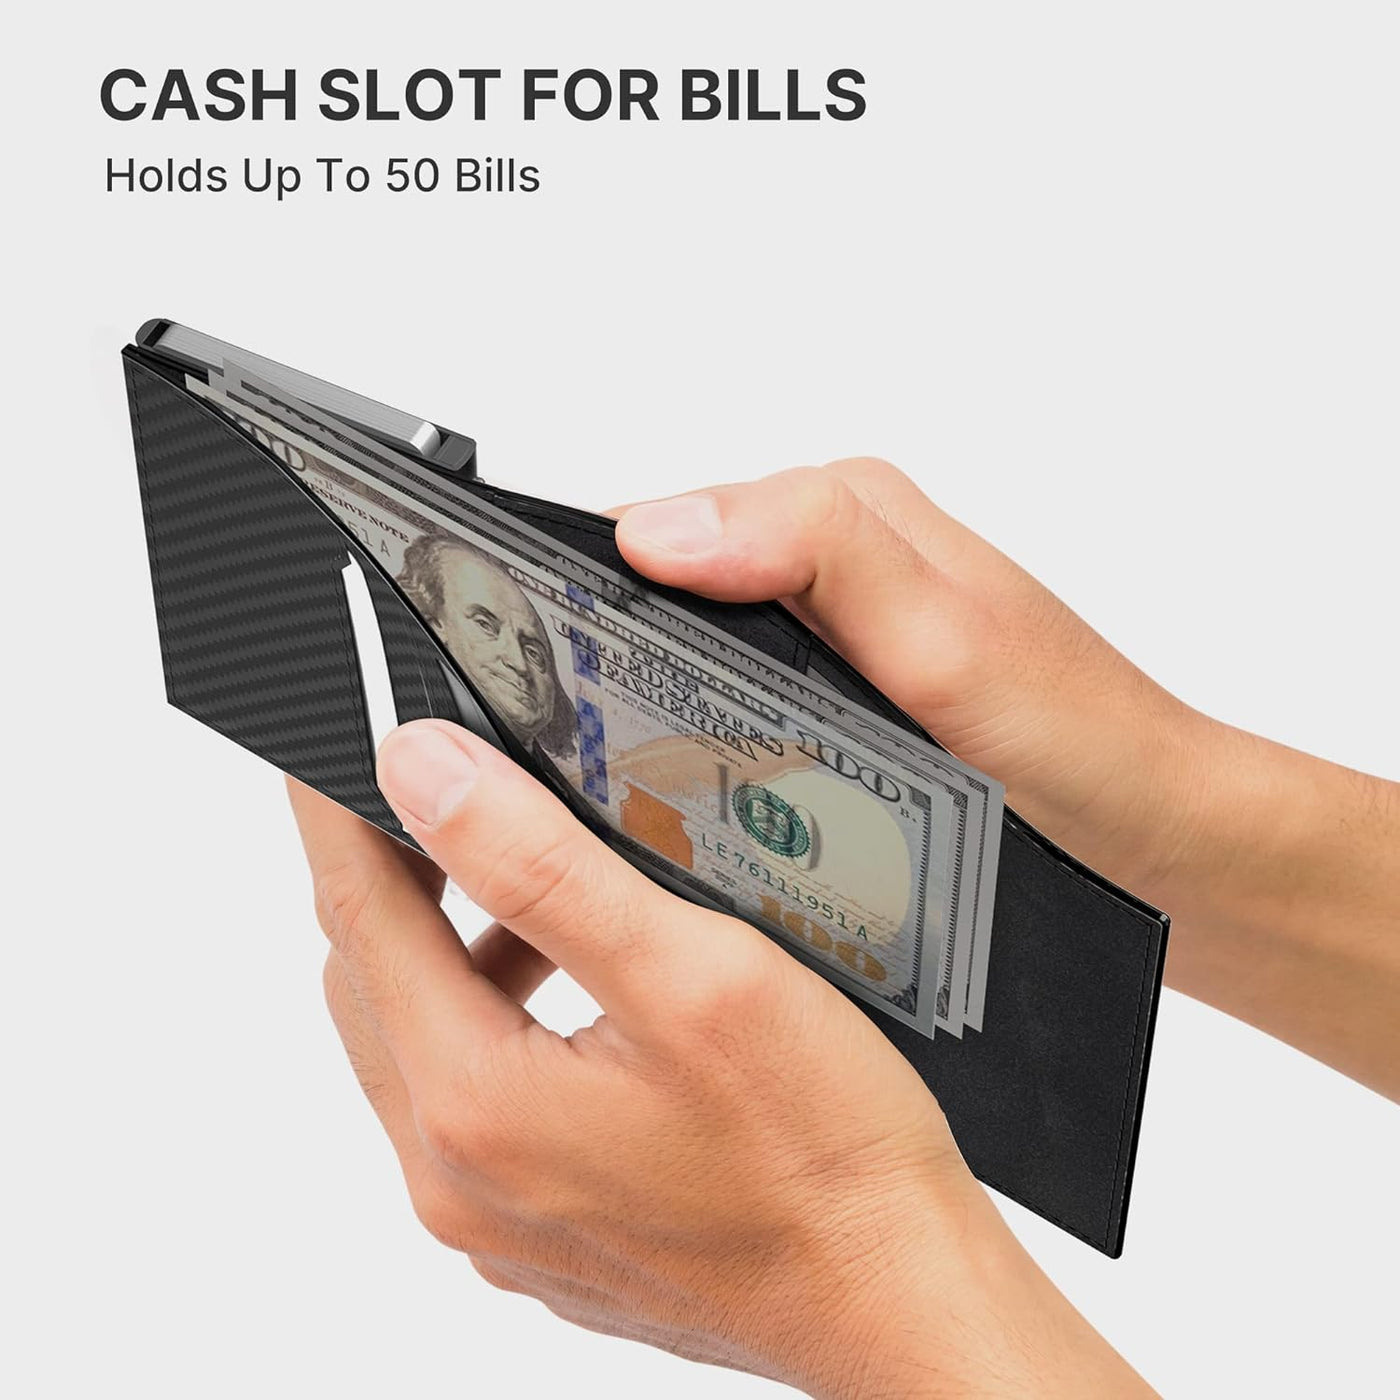 Leather AirTag Wallet for Men - RFID Blocking, Slim, Carbon Fiber, 9-14 Card Capacity, ID Window, Cash Slot - EVERRD USA